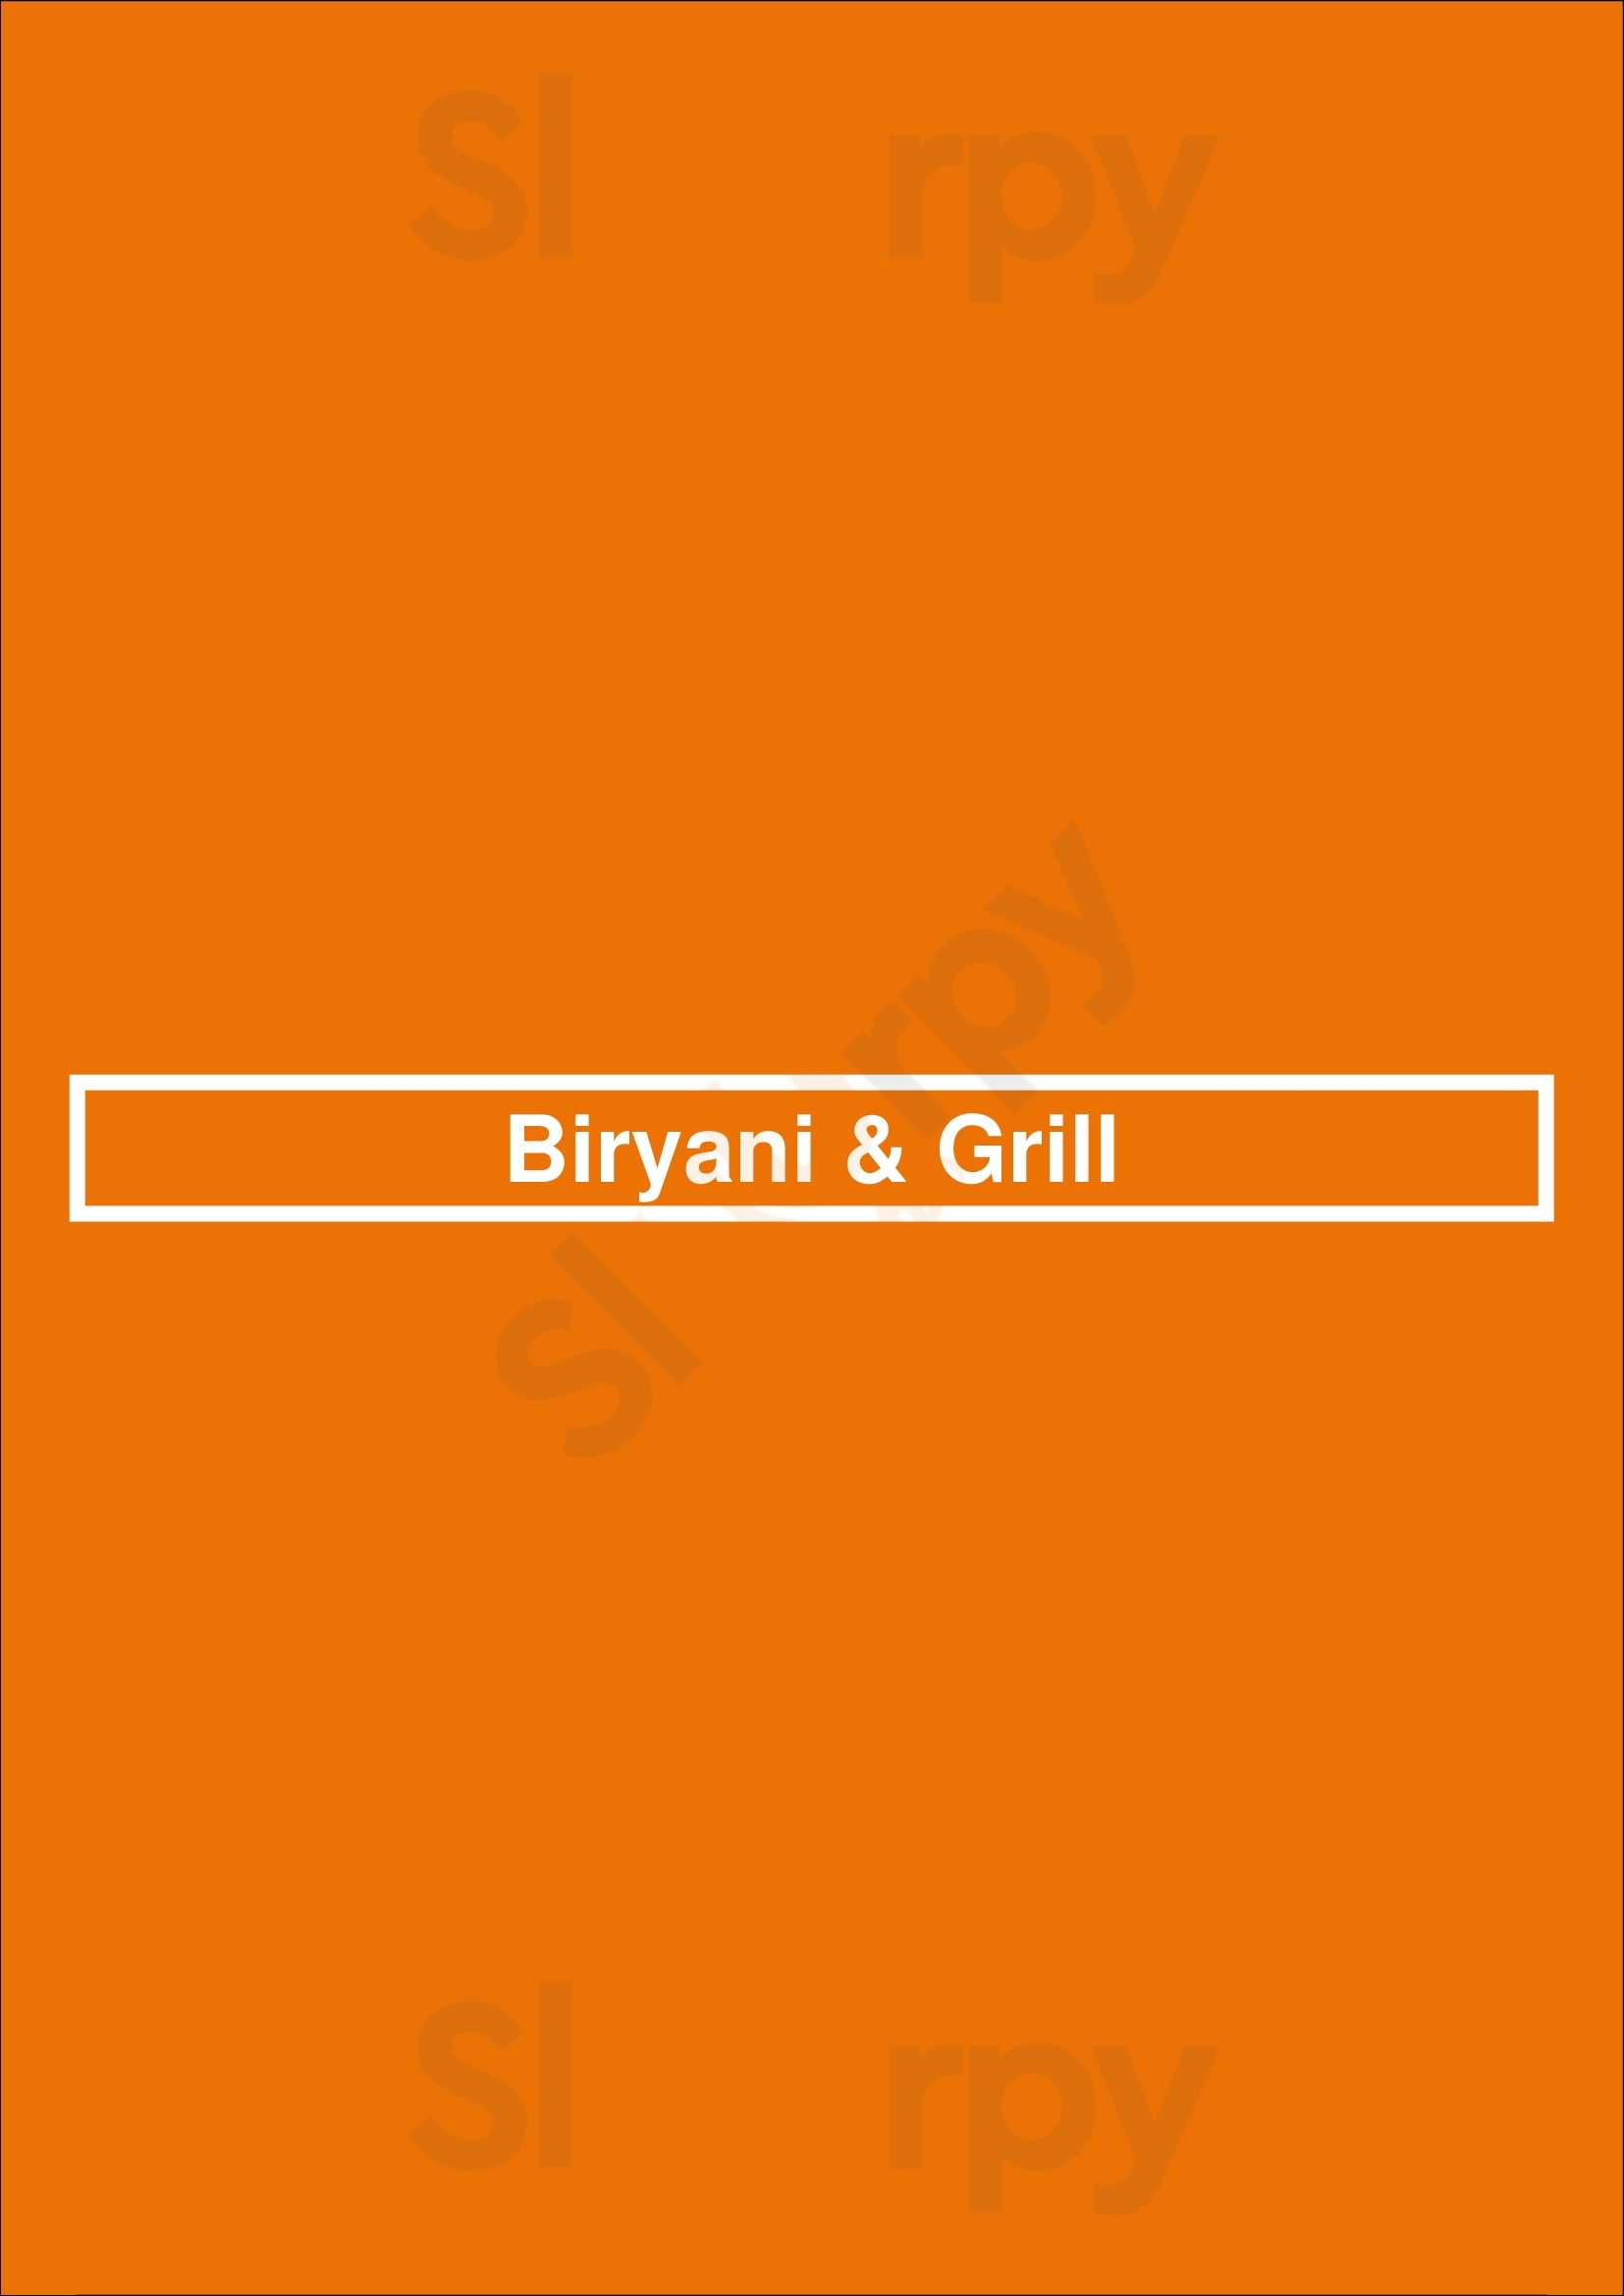 Biryani & Grill Windsor Menu - 1